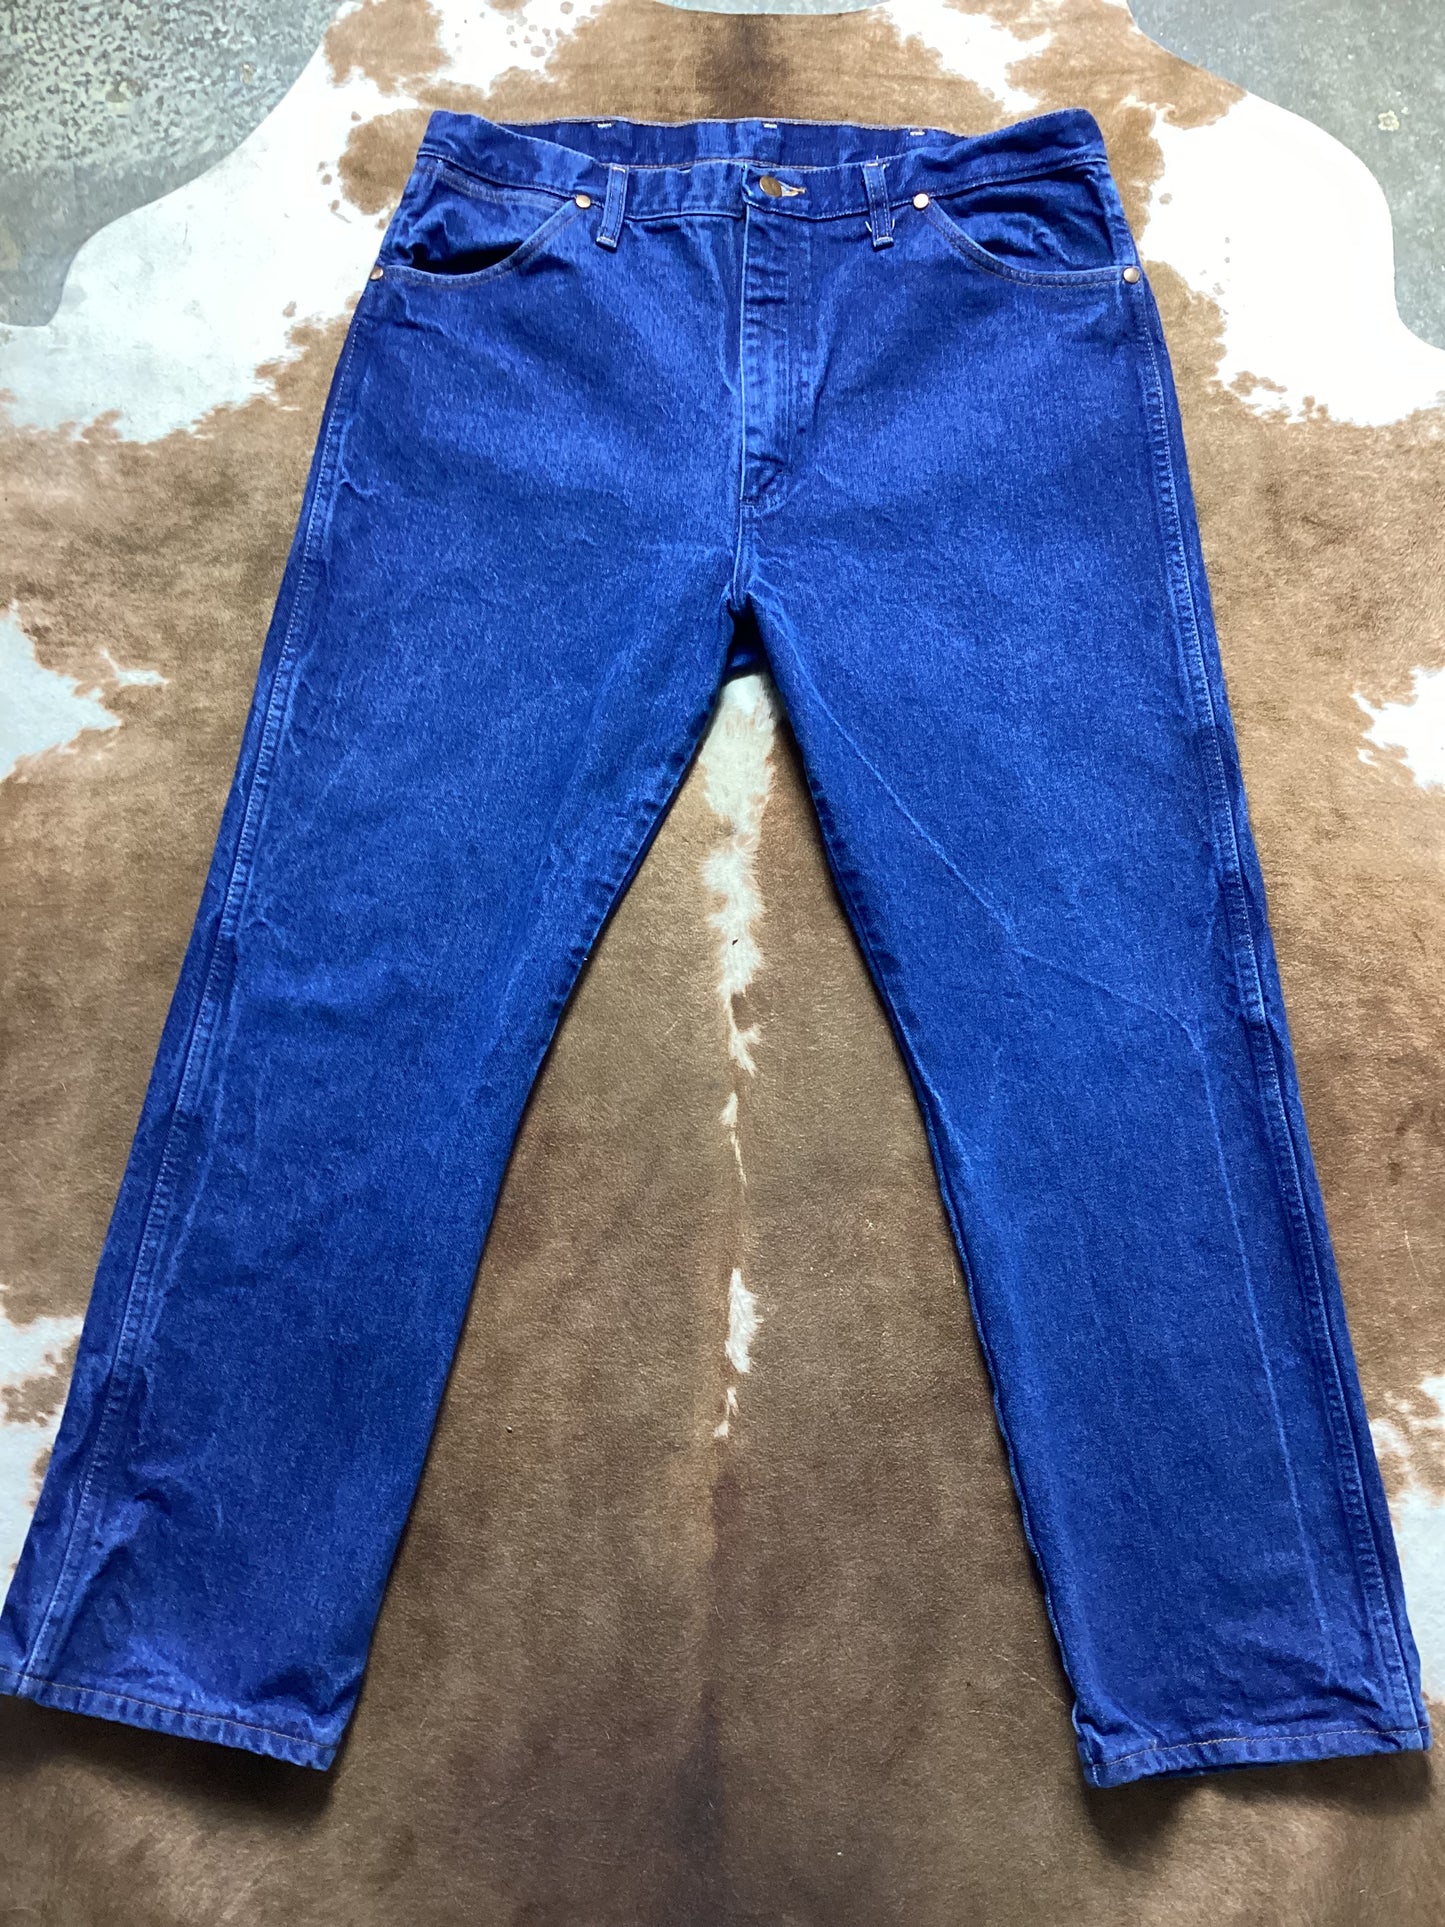 Vintage Wrangler Cowboy Cut Dark Blue Jeans 38x30